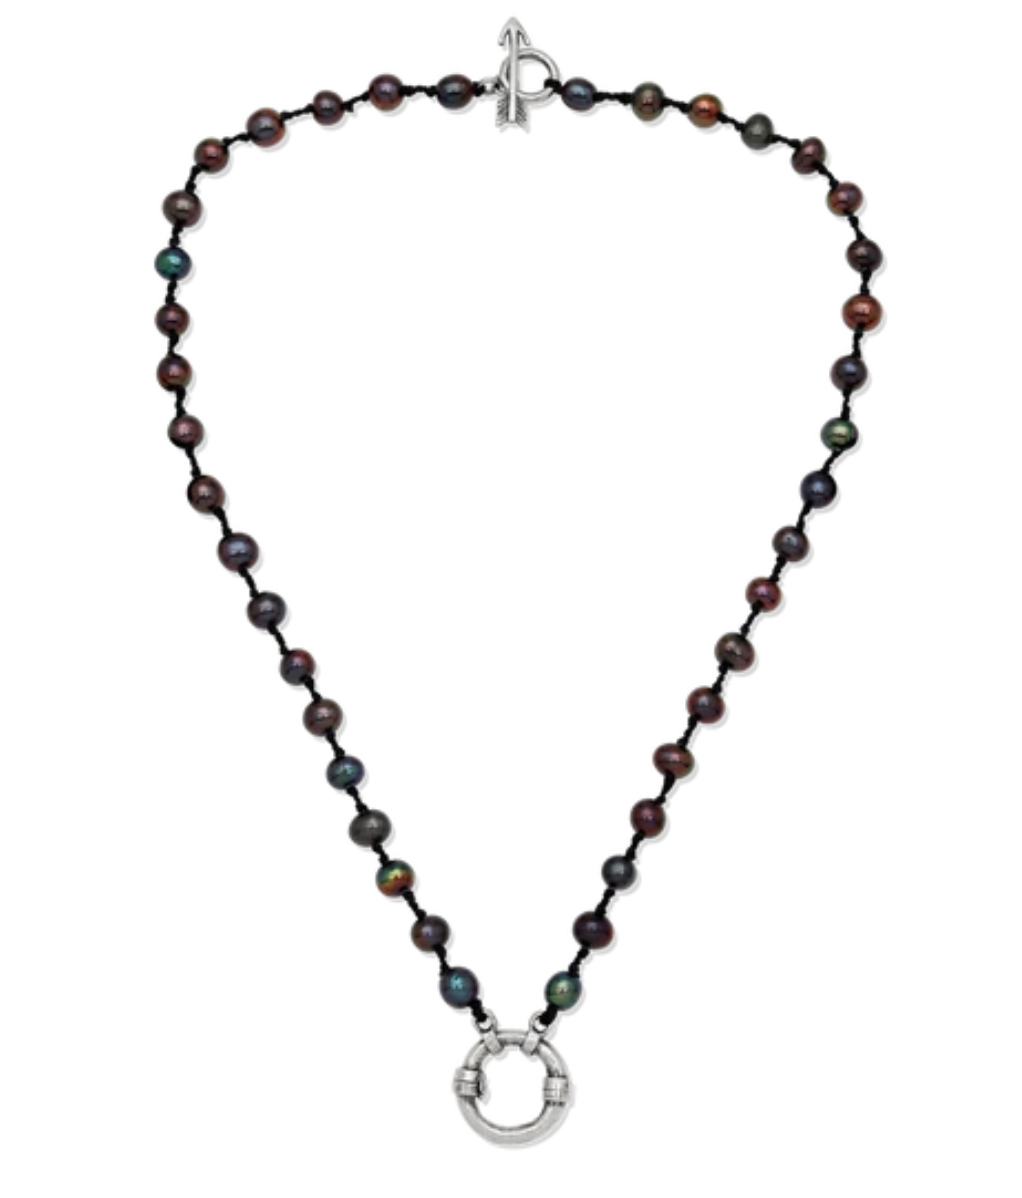 Boho Soul Necklace in Black Pearl